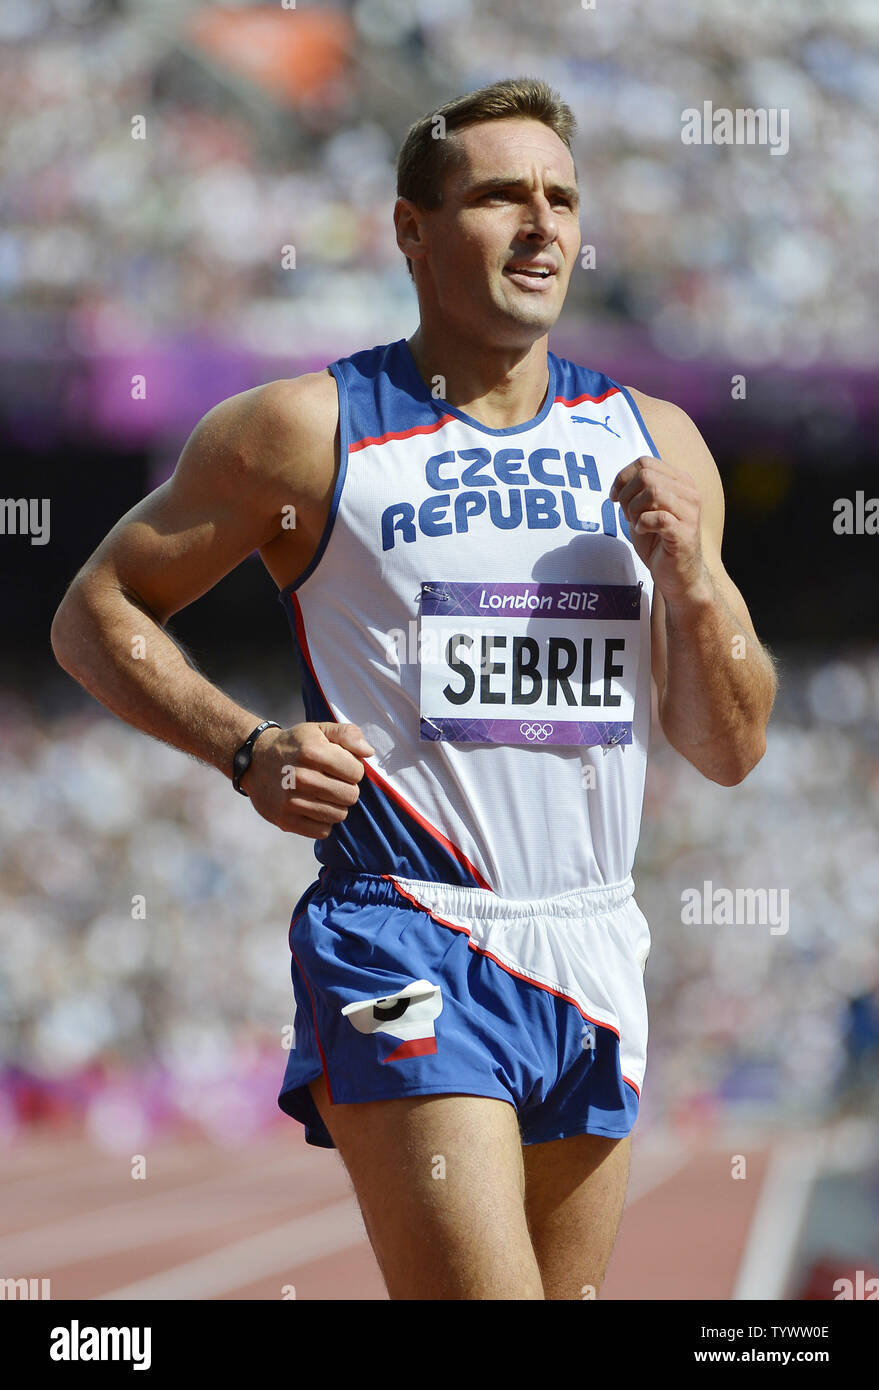 czech athlete record holder decathlon